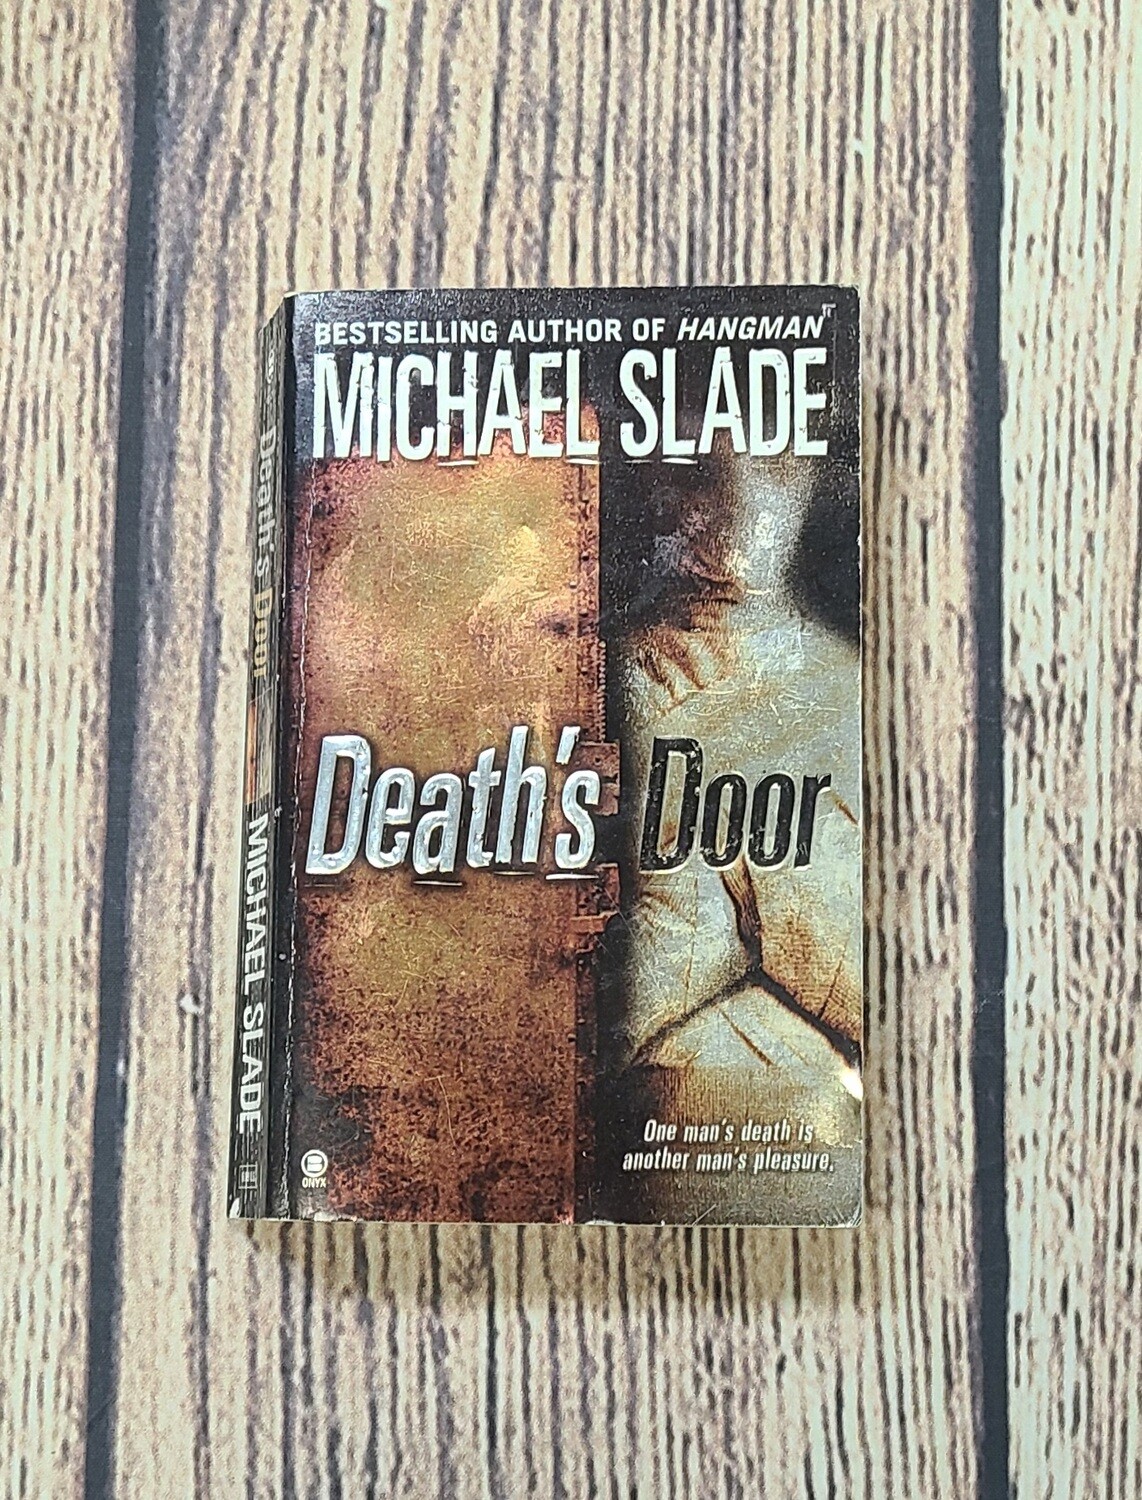 Death's Door by Michael Slade